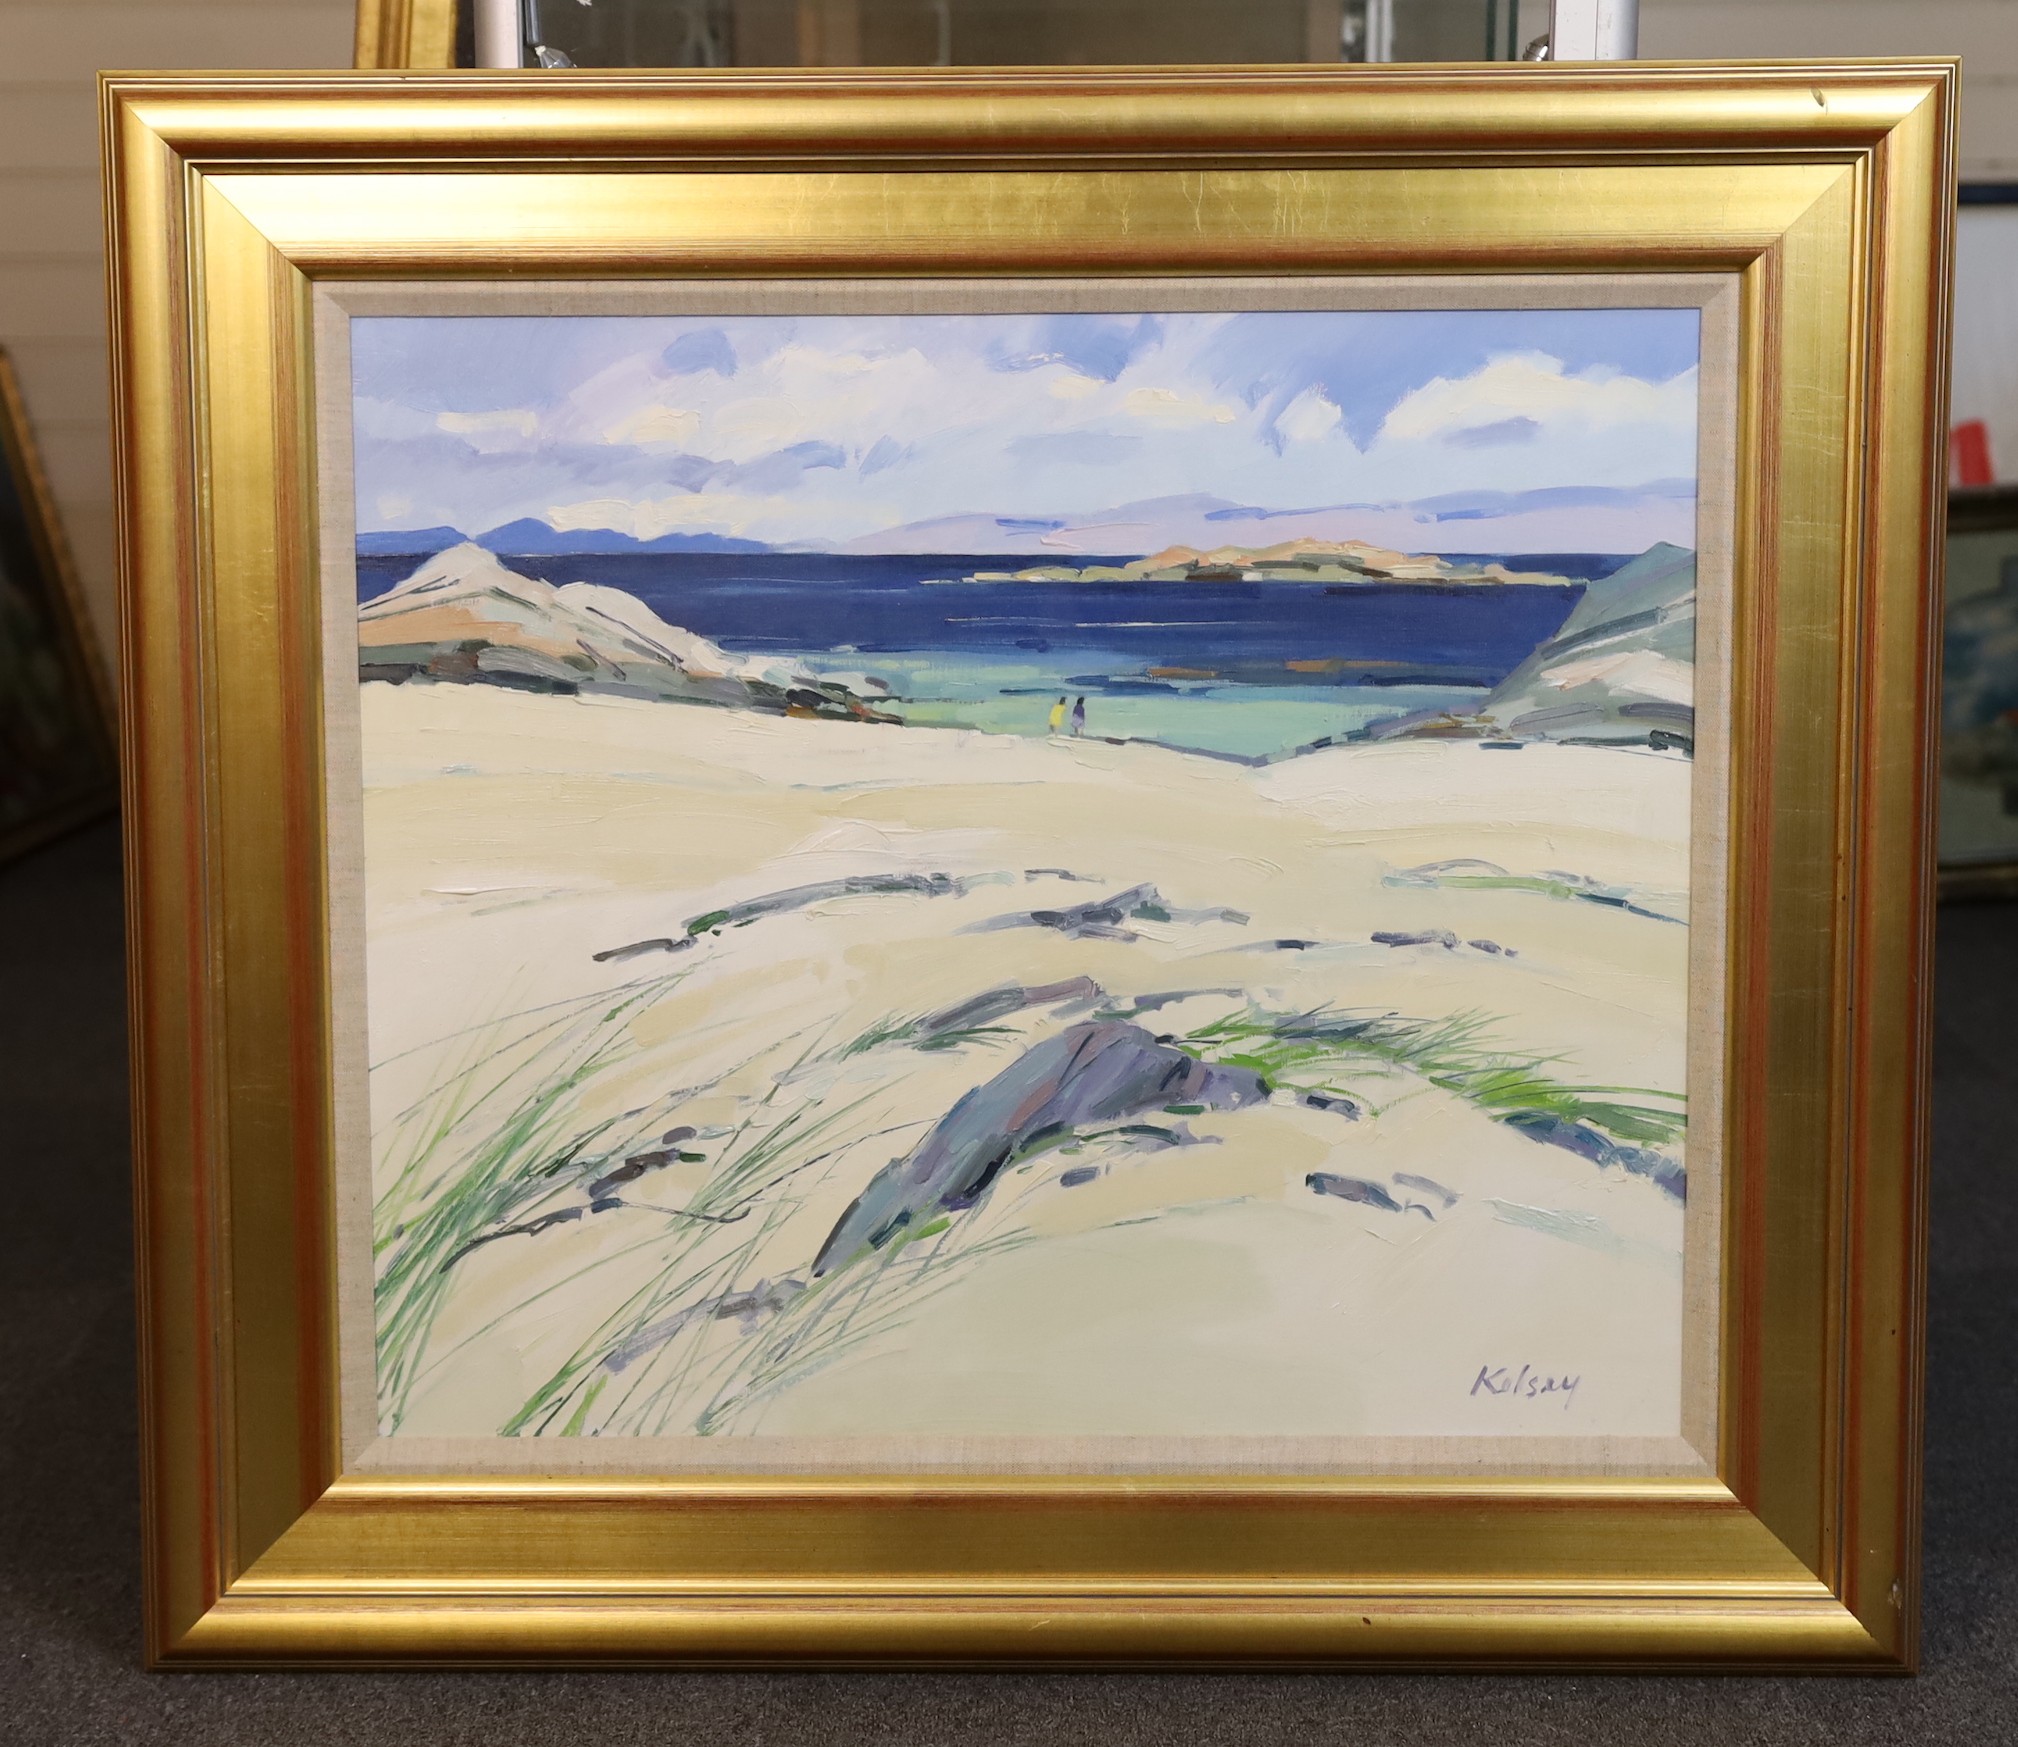 Robert Kelsey (Scottish, b.1949), 'Sunny beach - Iona', oil on canvas, 60 x 70cm